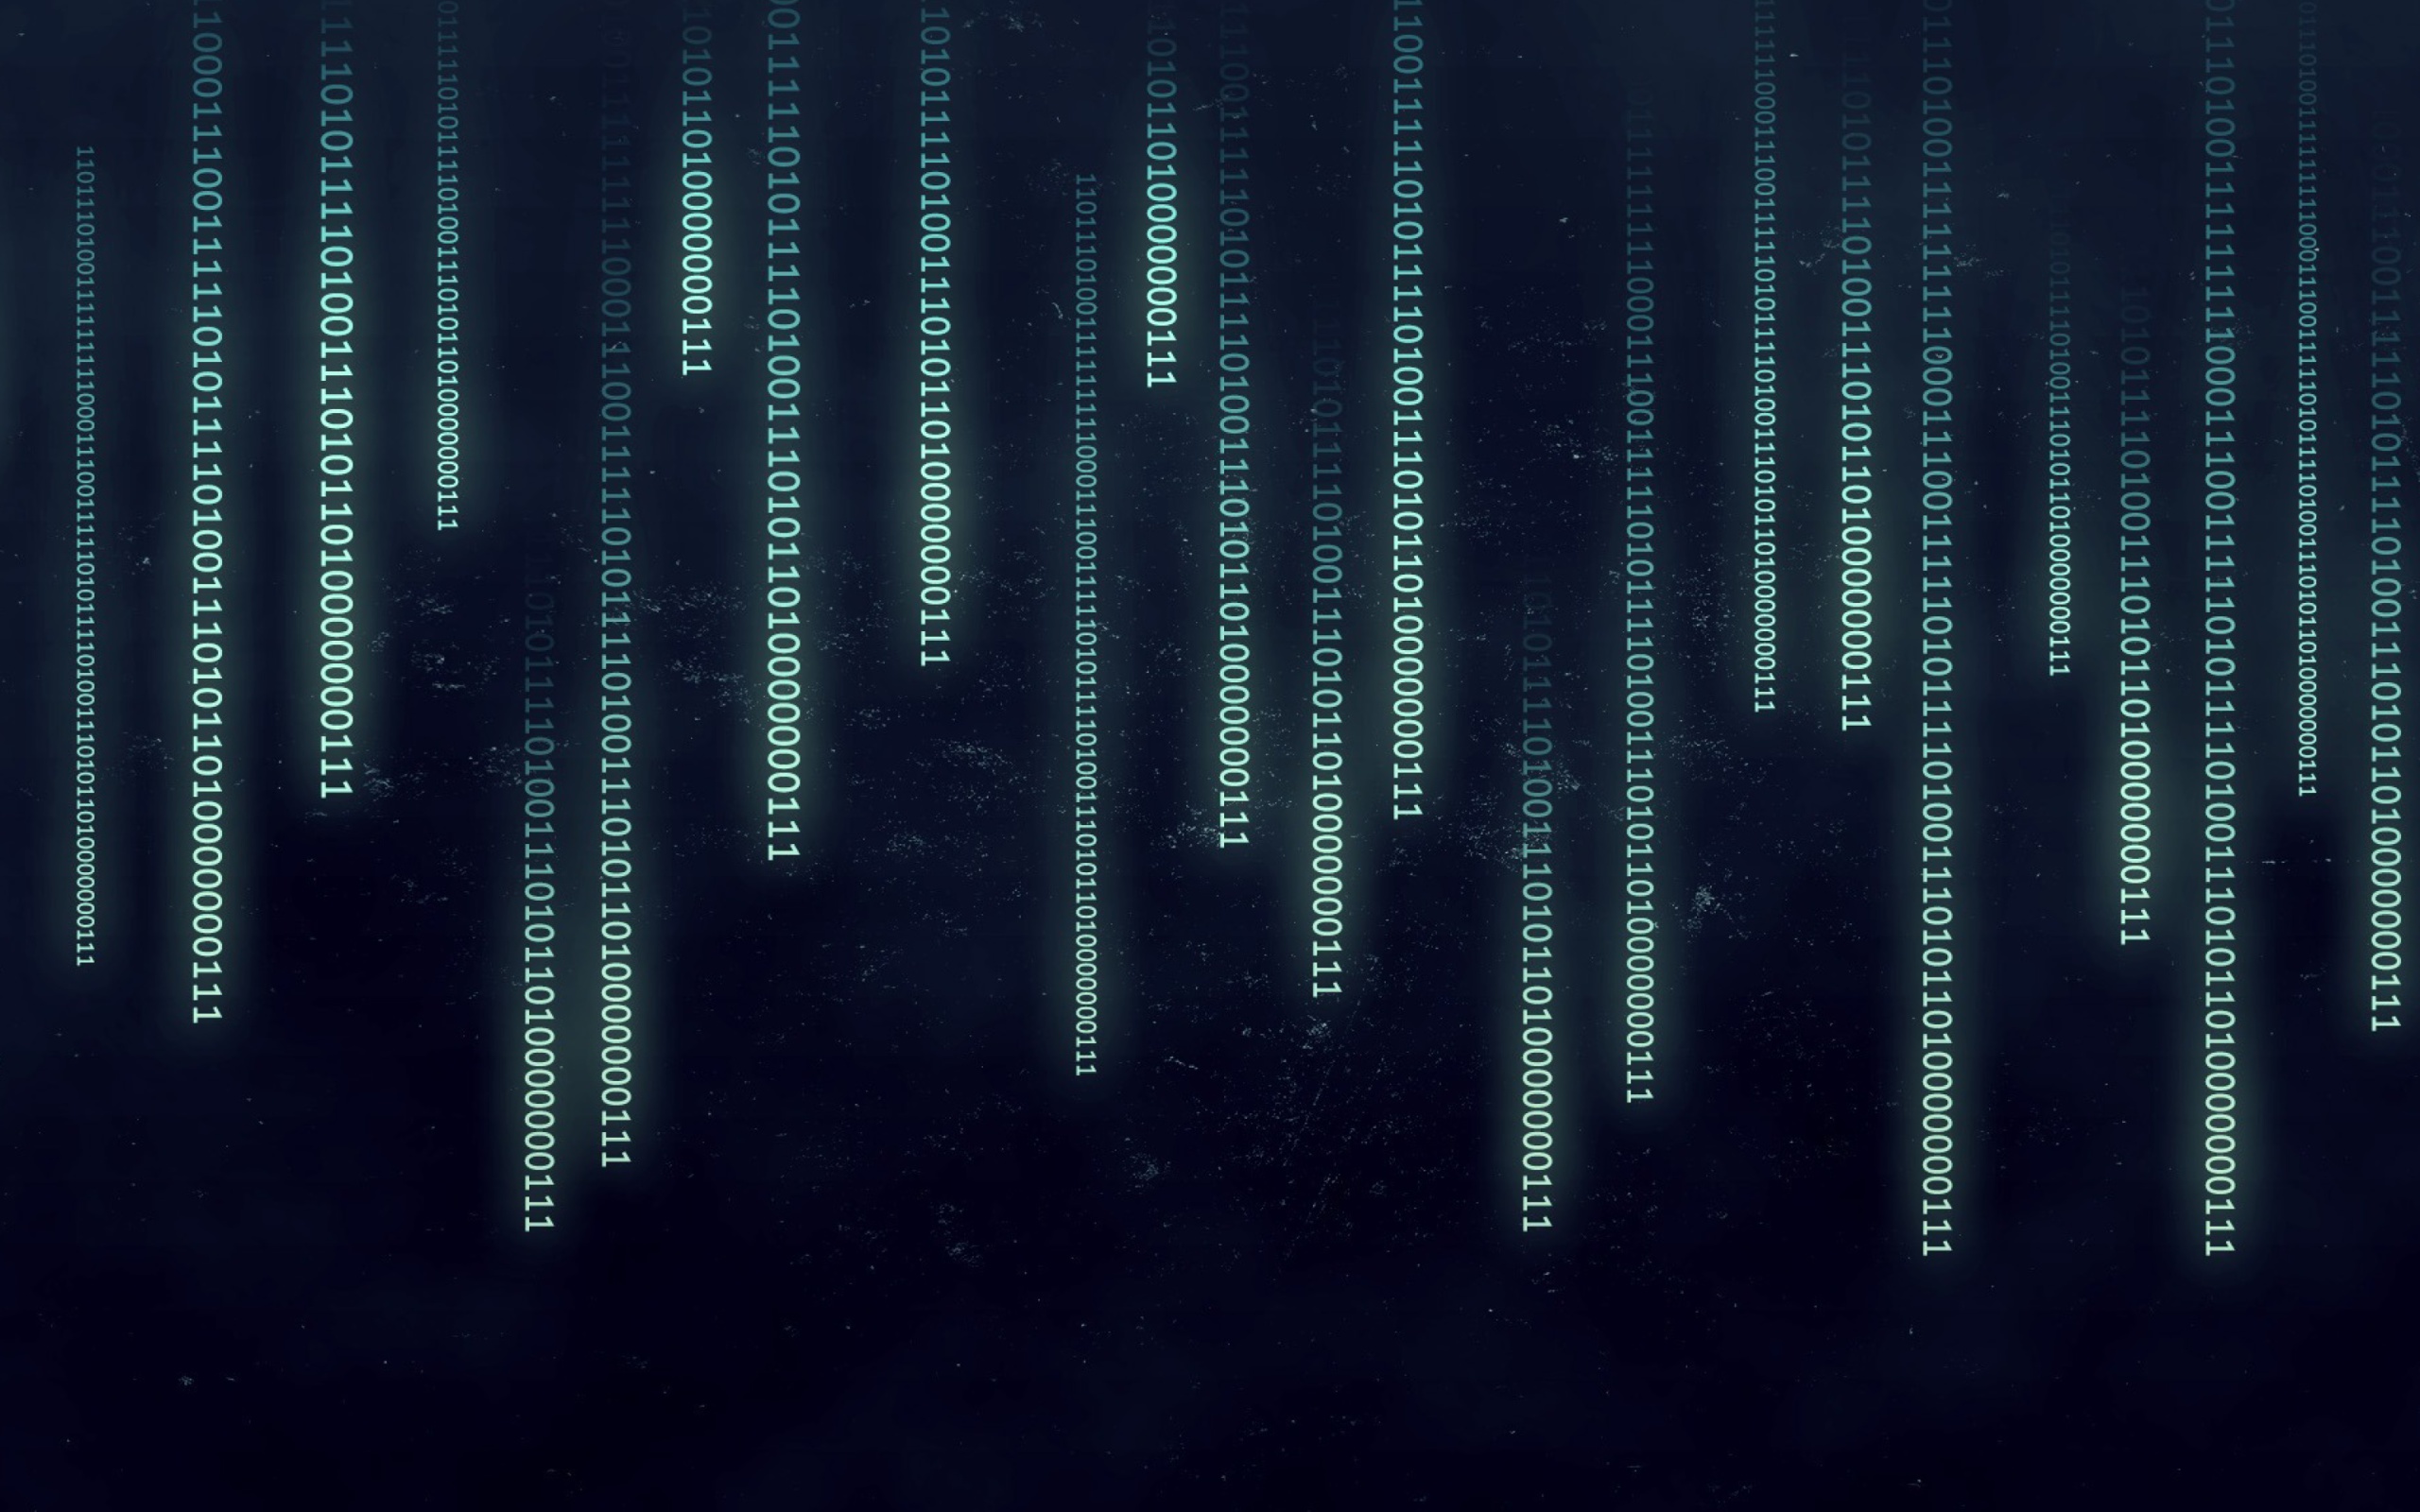 Das Matrix Binary Numbers Wallpaper 2560x1600